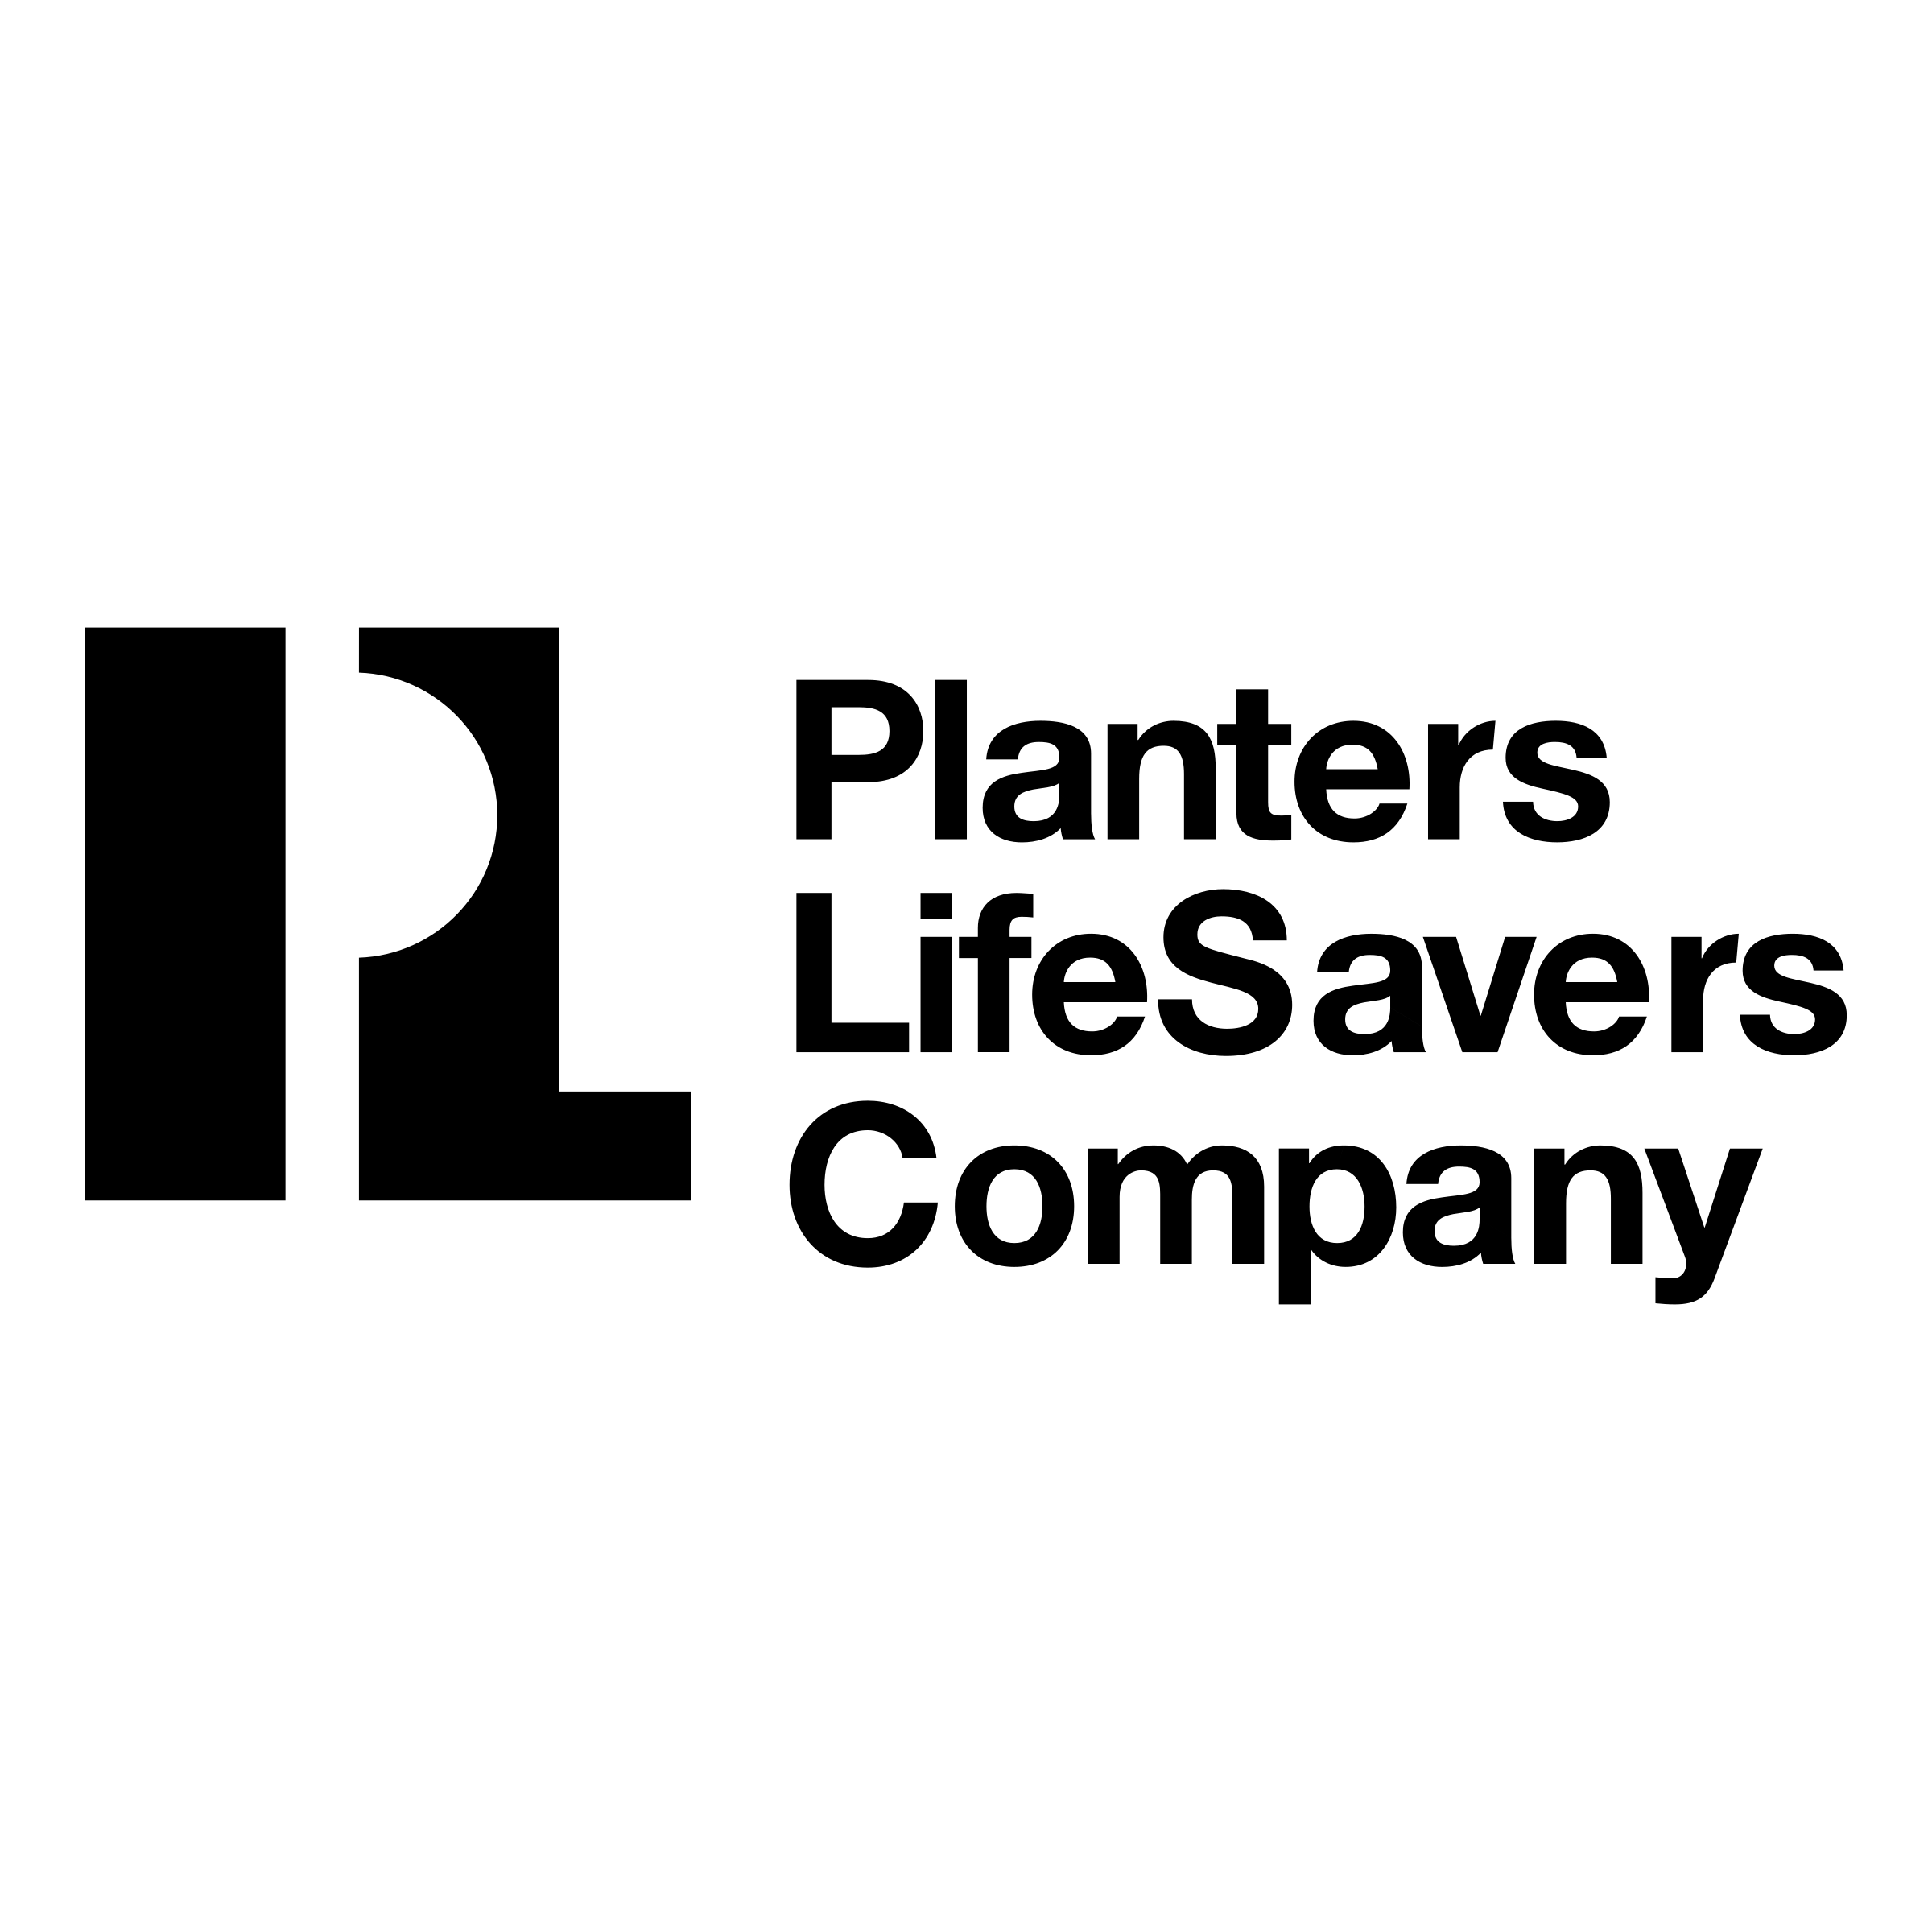 White Planters Logo - Planters LifeSaver Company Logo PNG Transparent & SVG Vector ...